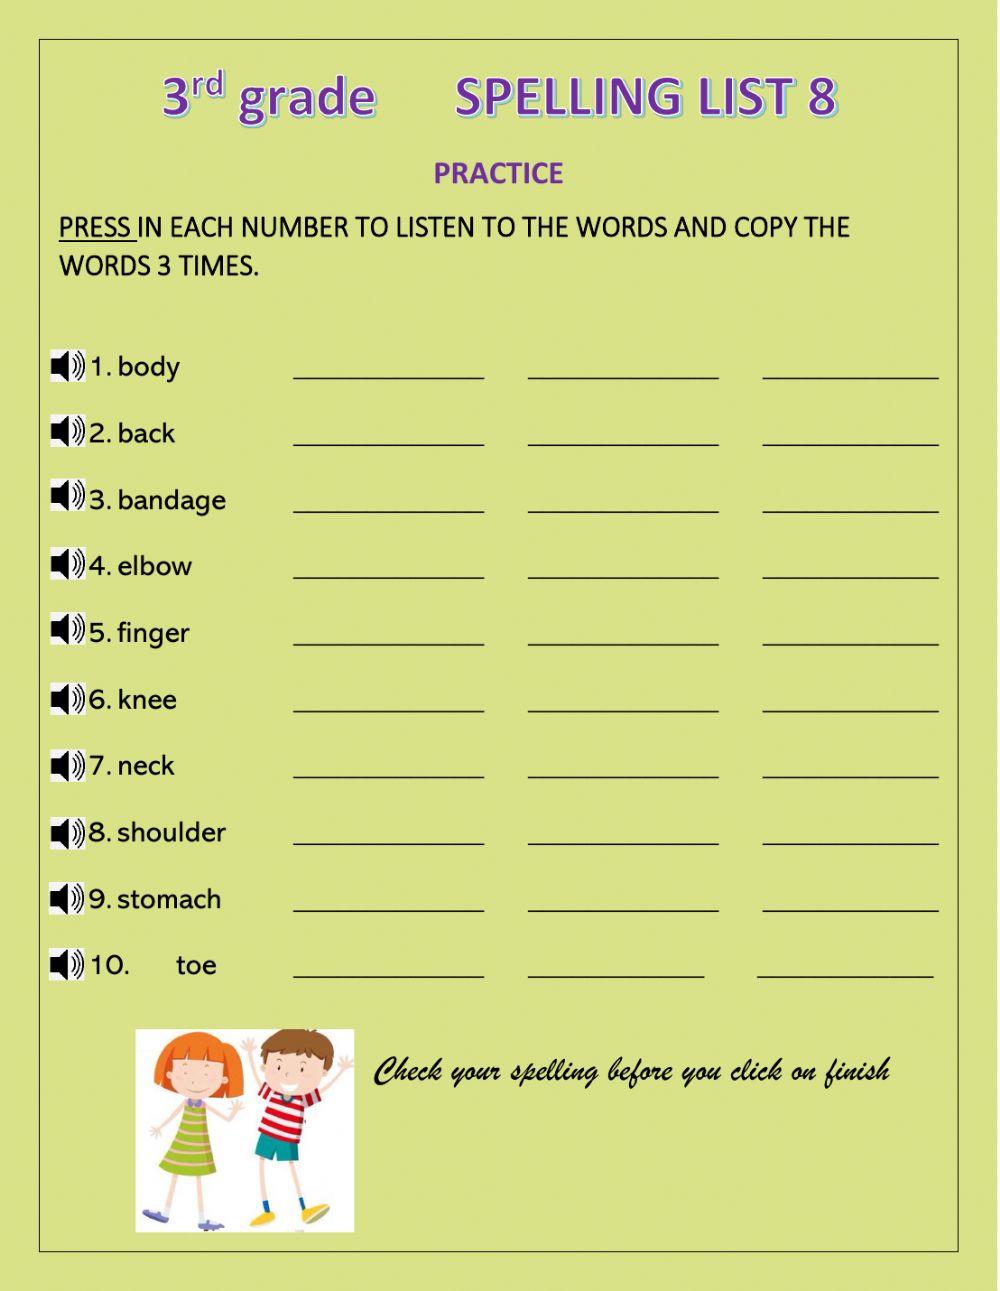 Spelling practice